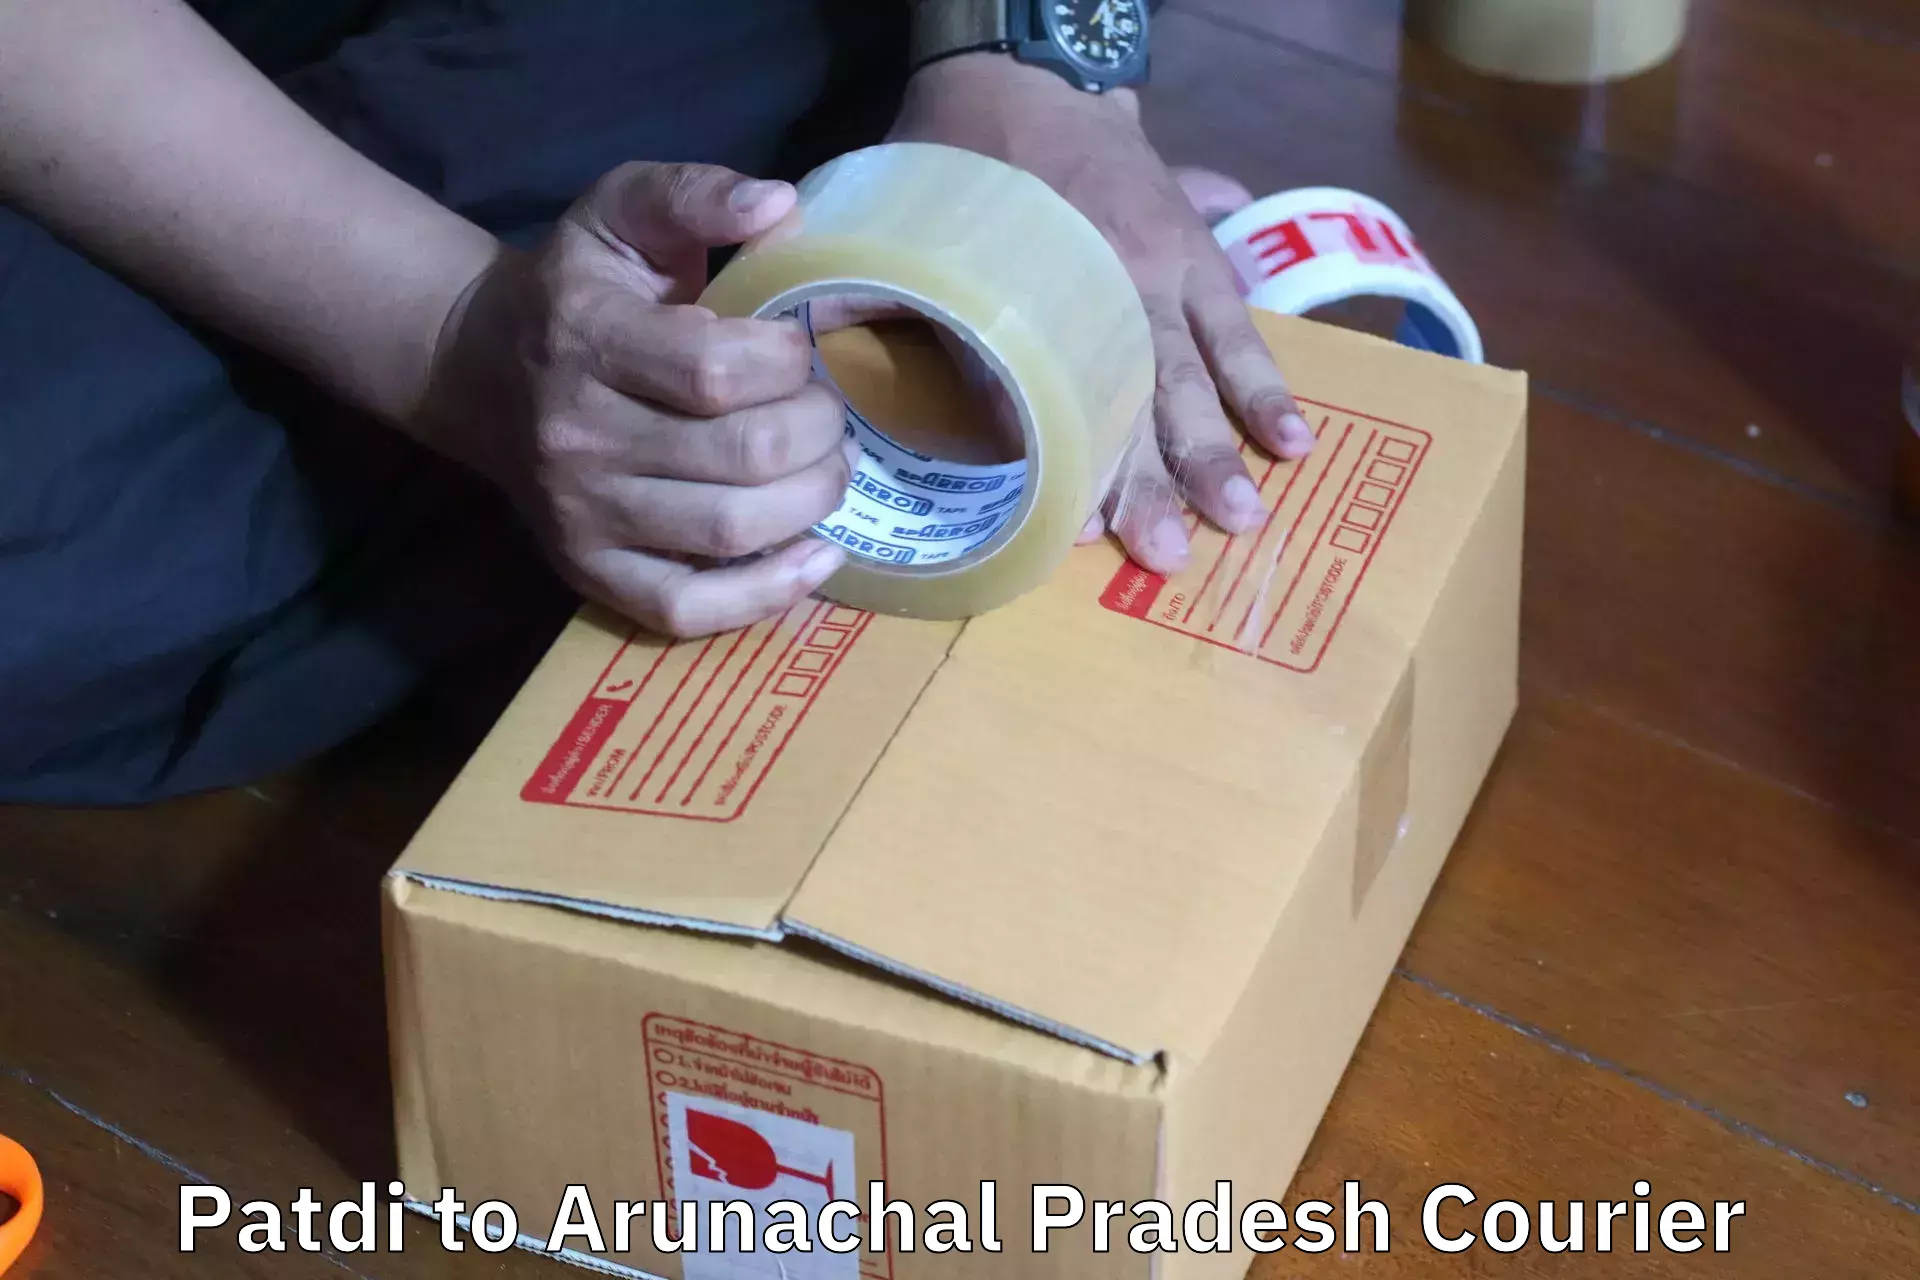 Reliable moving assistance Patdi to Arunachal Pradesh